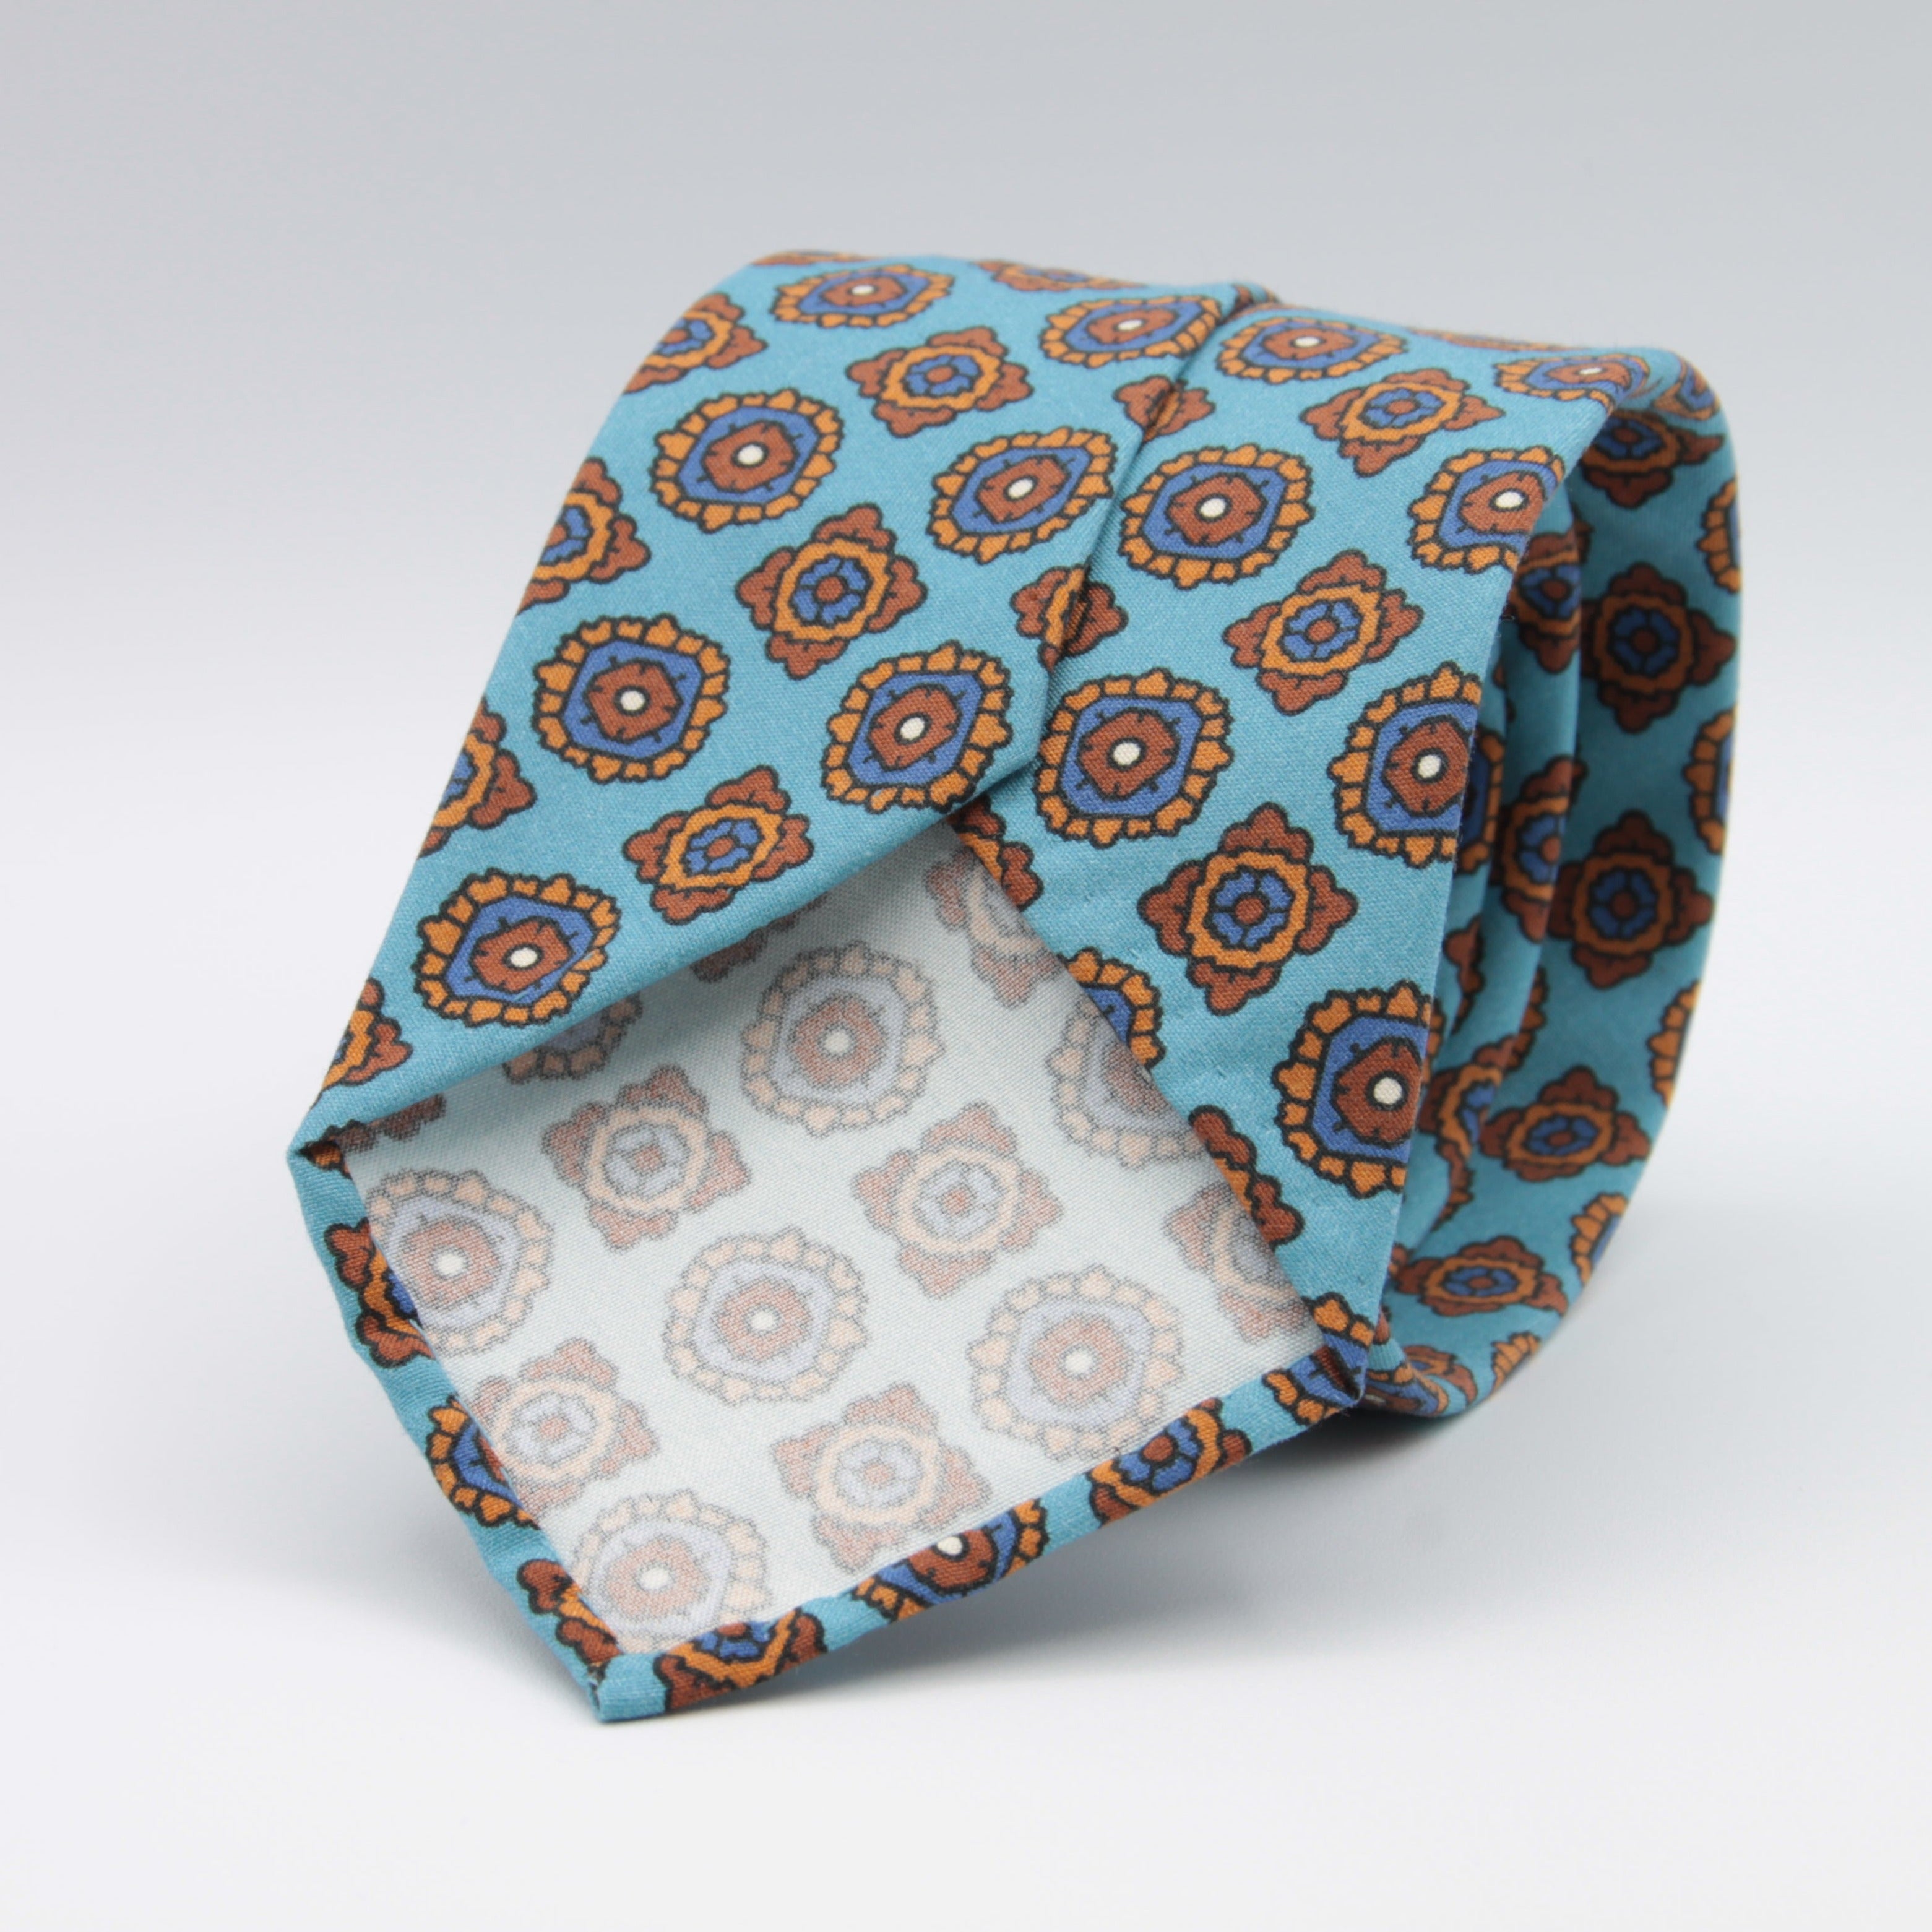 Cruciani & Bella 100% Printed Madder Silk  Italian fabric Unlined tie Light Blue, Brown and Blue Motifs Tie Handmade in Italy 8 cm x 150 cm #7619